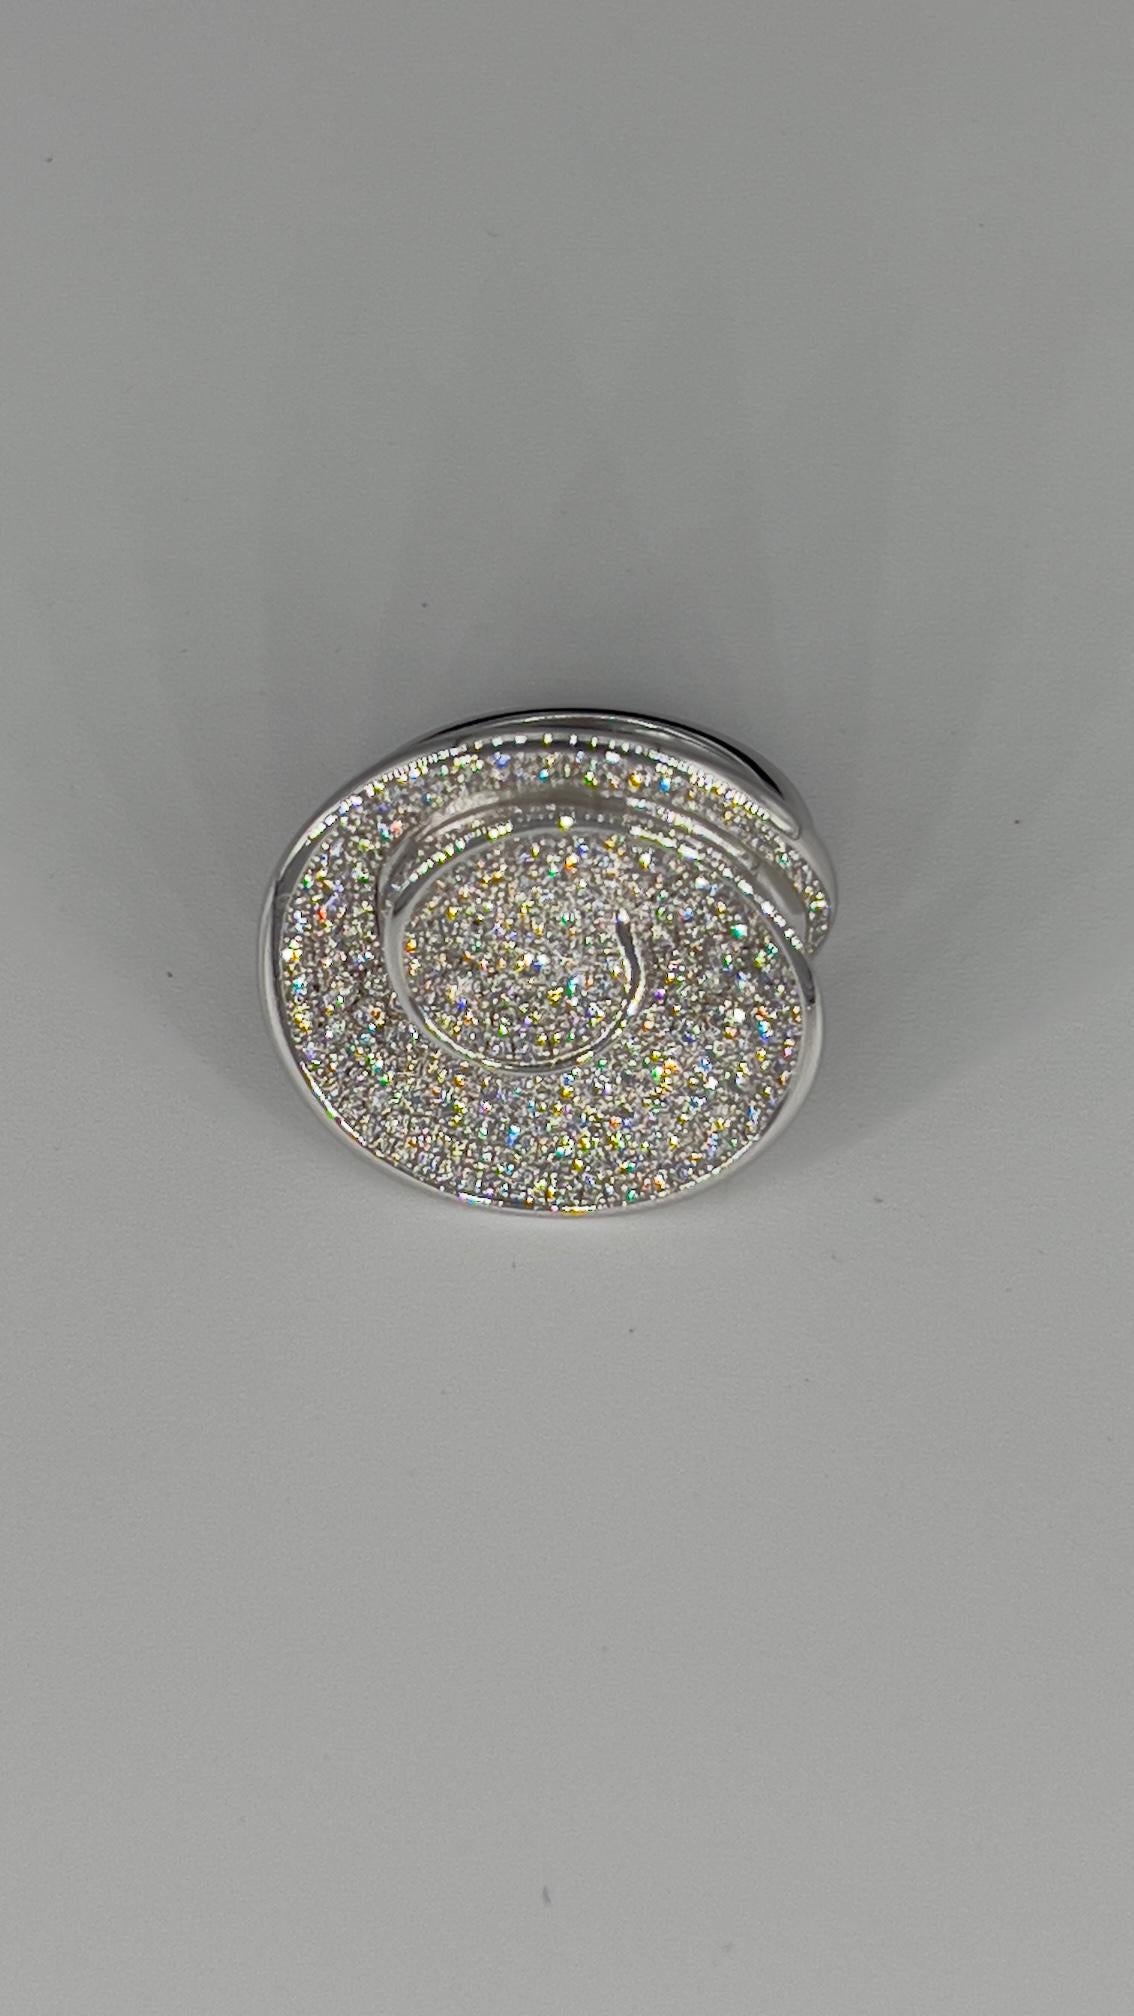 18 Carat white gold
226 diamonds GVS 1.84 carat
Fashion ring by George Lambert, an artisan jeweler from Geneva, Switzerland. 